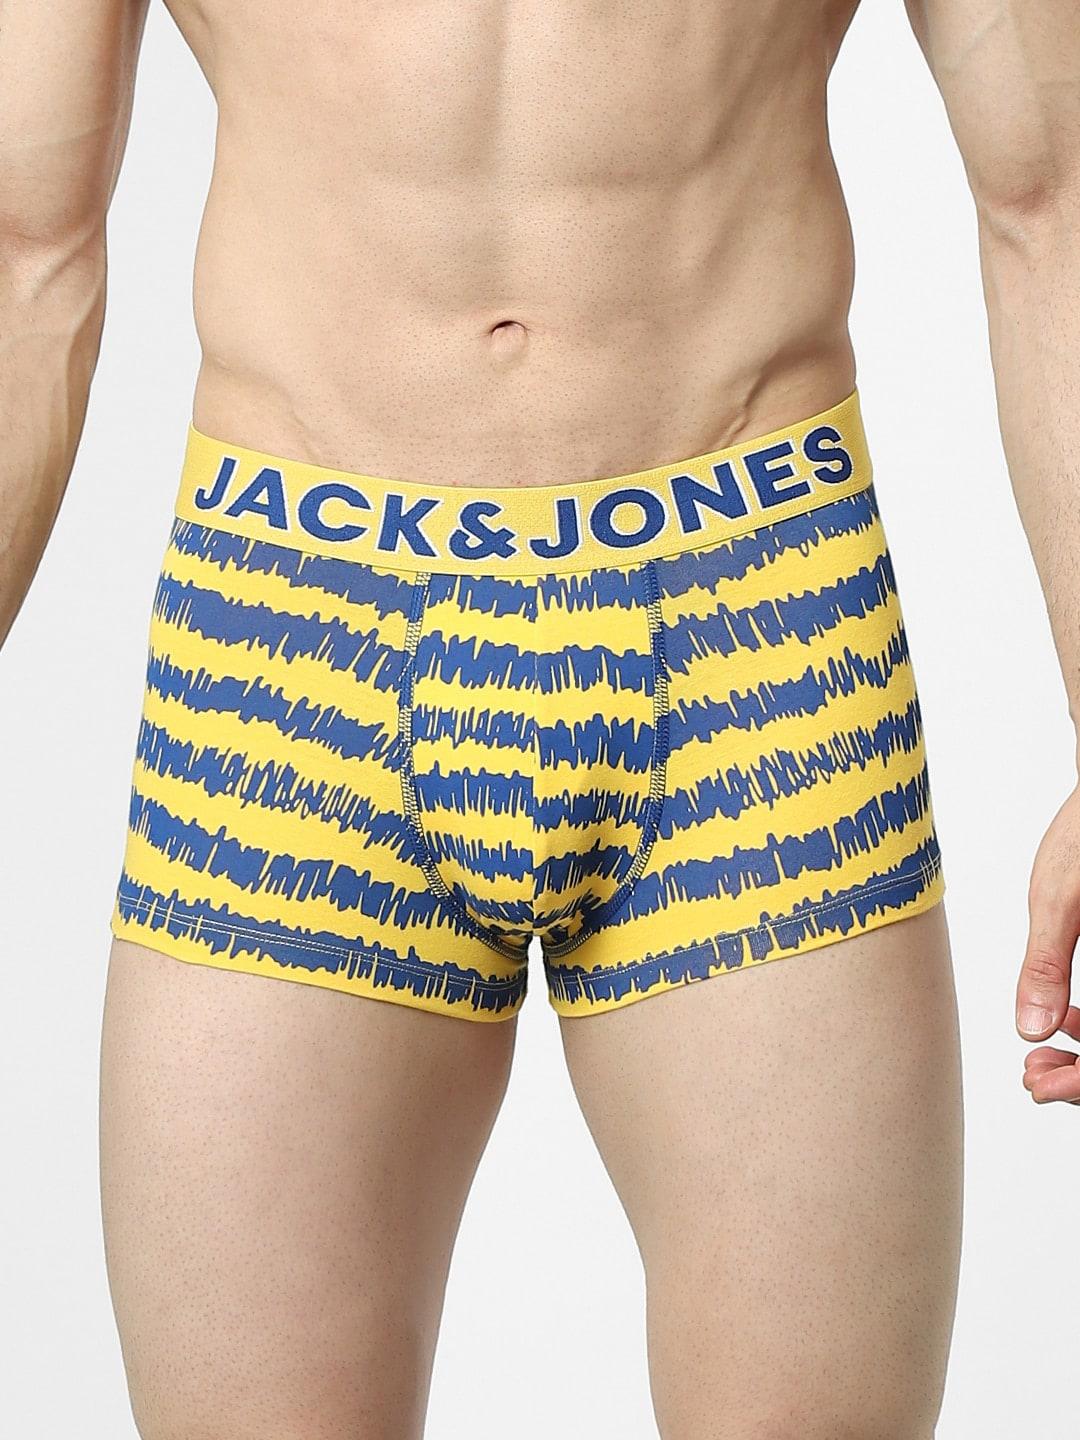 jack & jones men yellow & blue striped cotton trunk